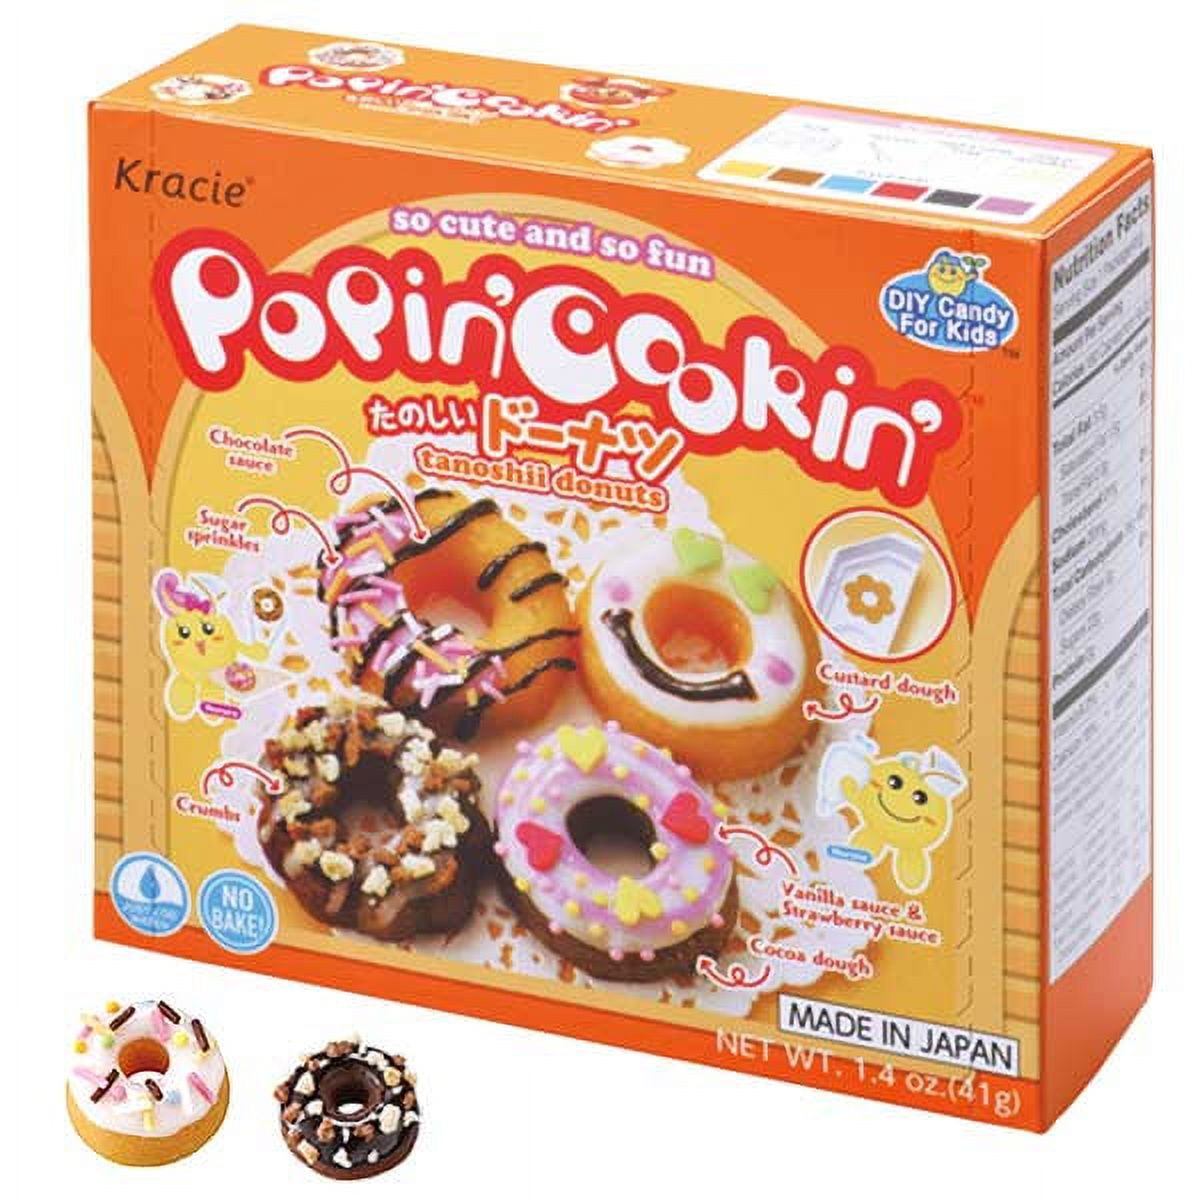 Kracie Popin' Cookin' Tanoshii Donuts - 1.4 oz